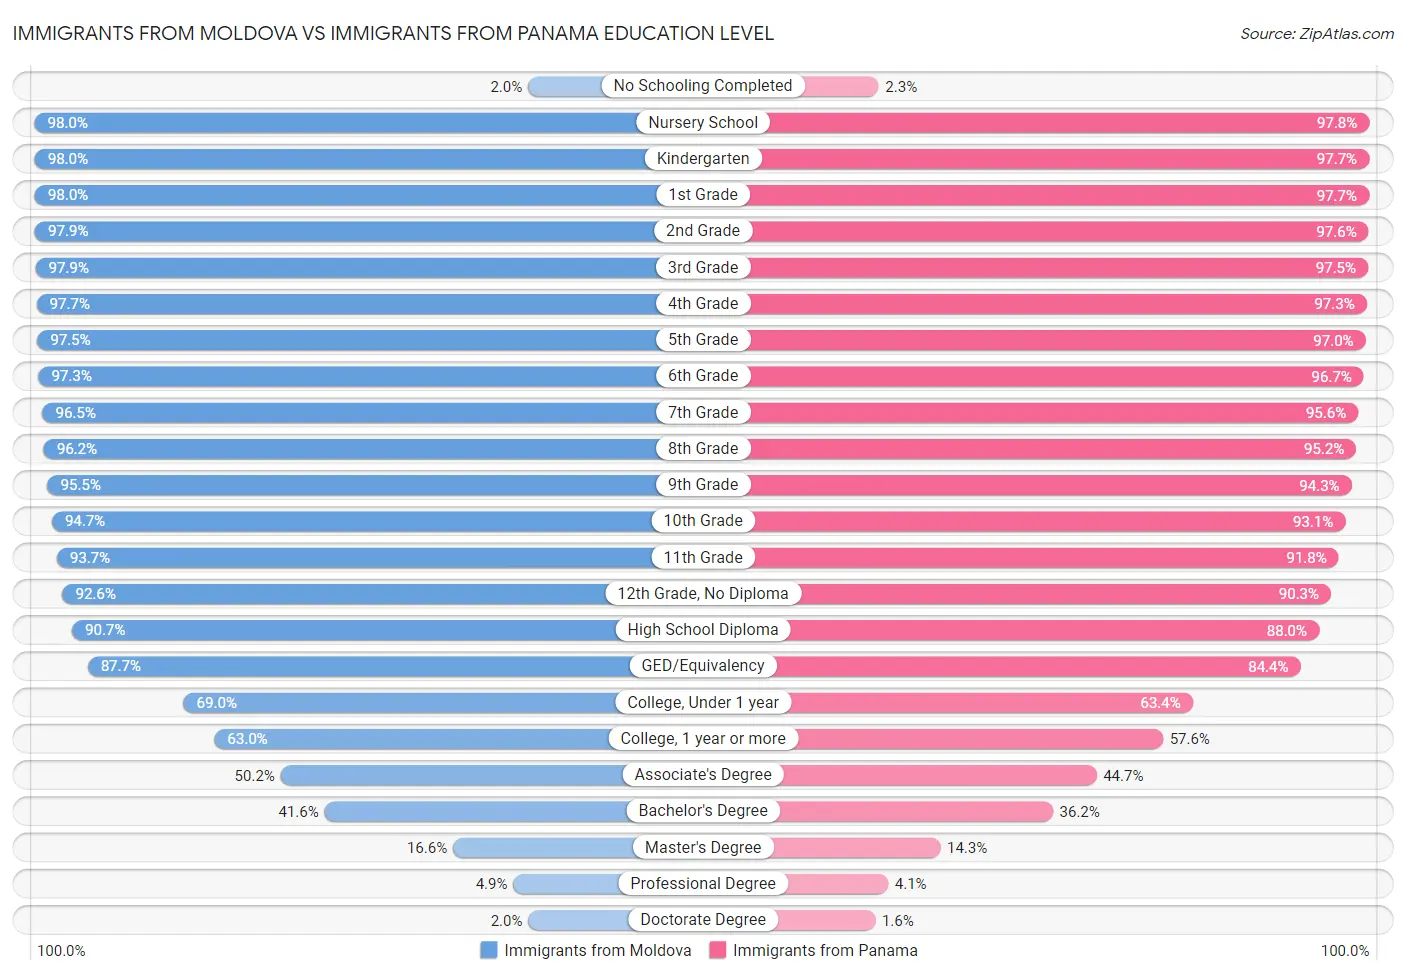 Immigrants from Moldova vs Immigrants from Panama Education Level